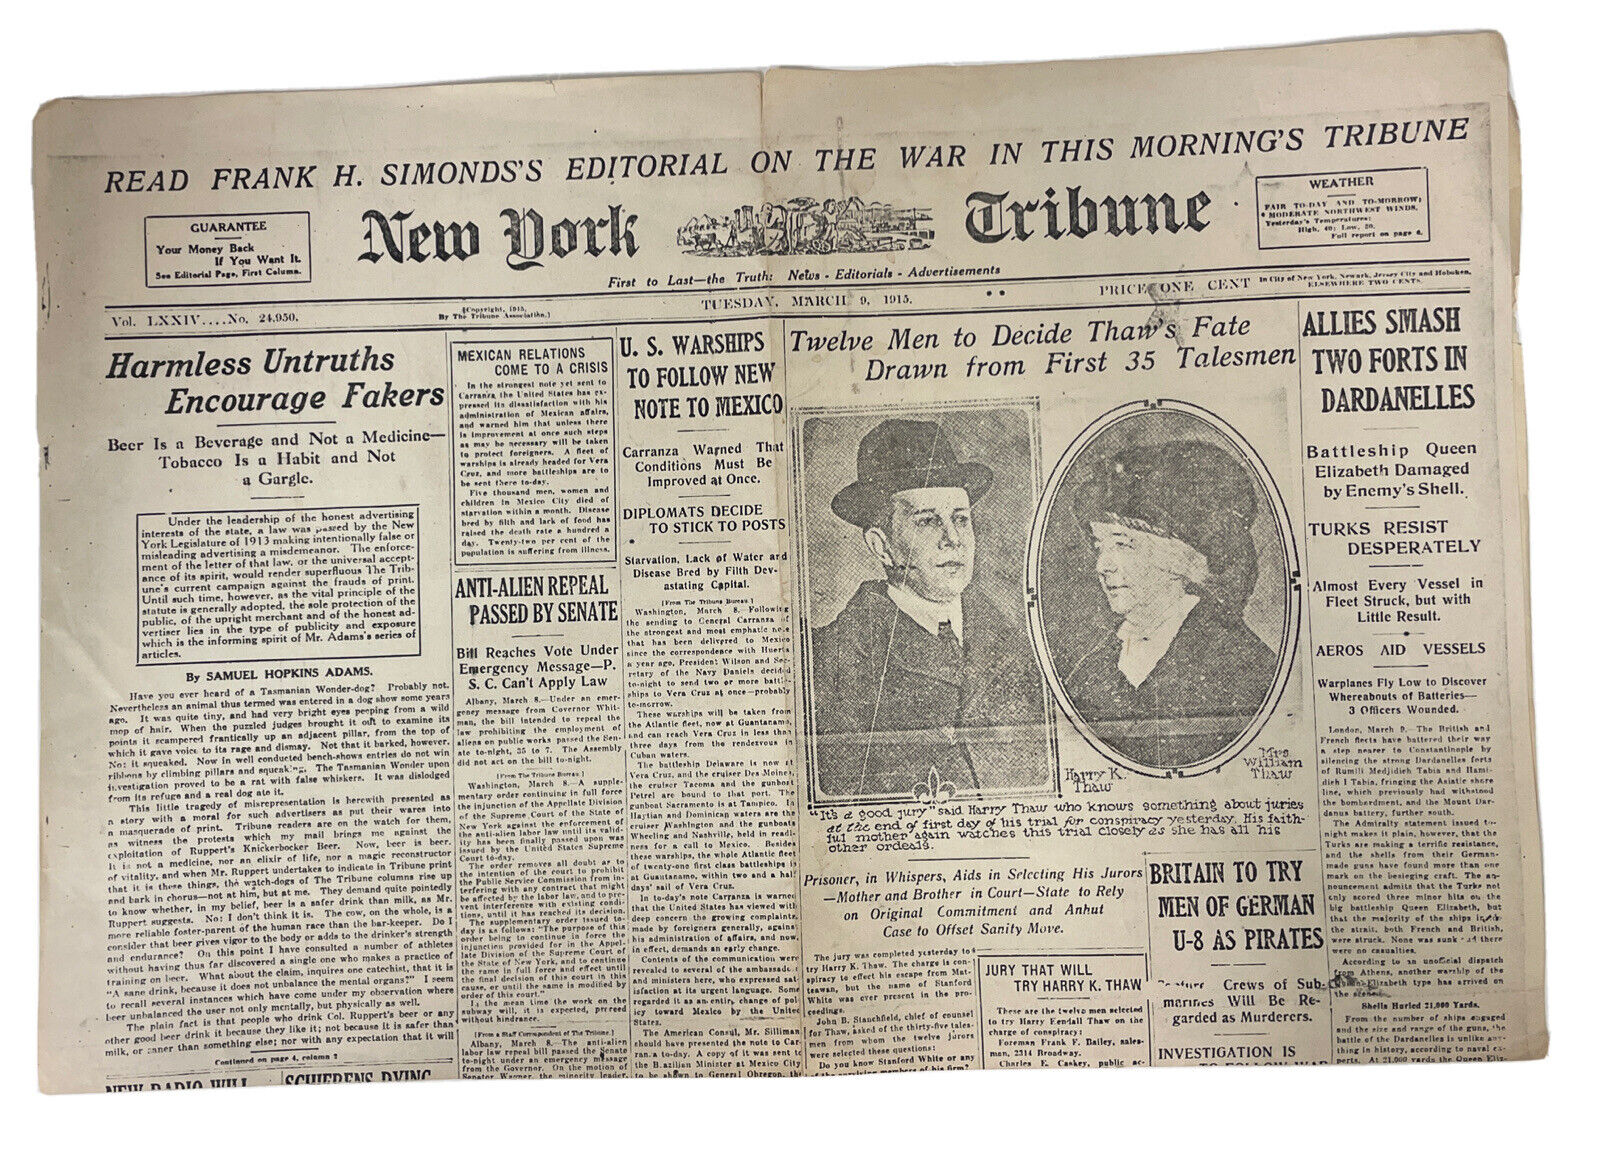 New York Tribune | March 1915 Newspaper